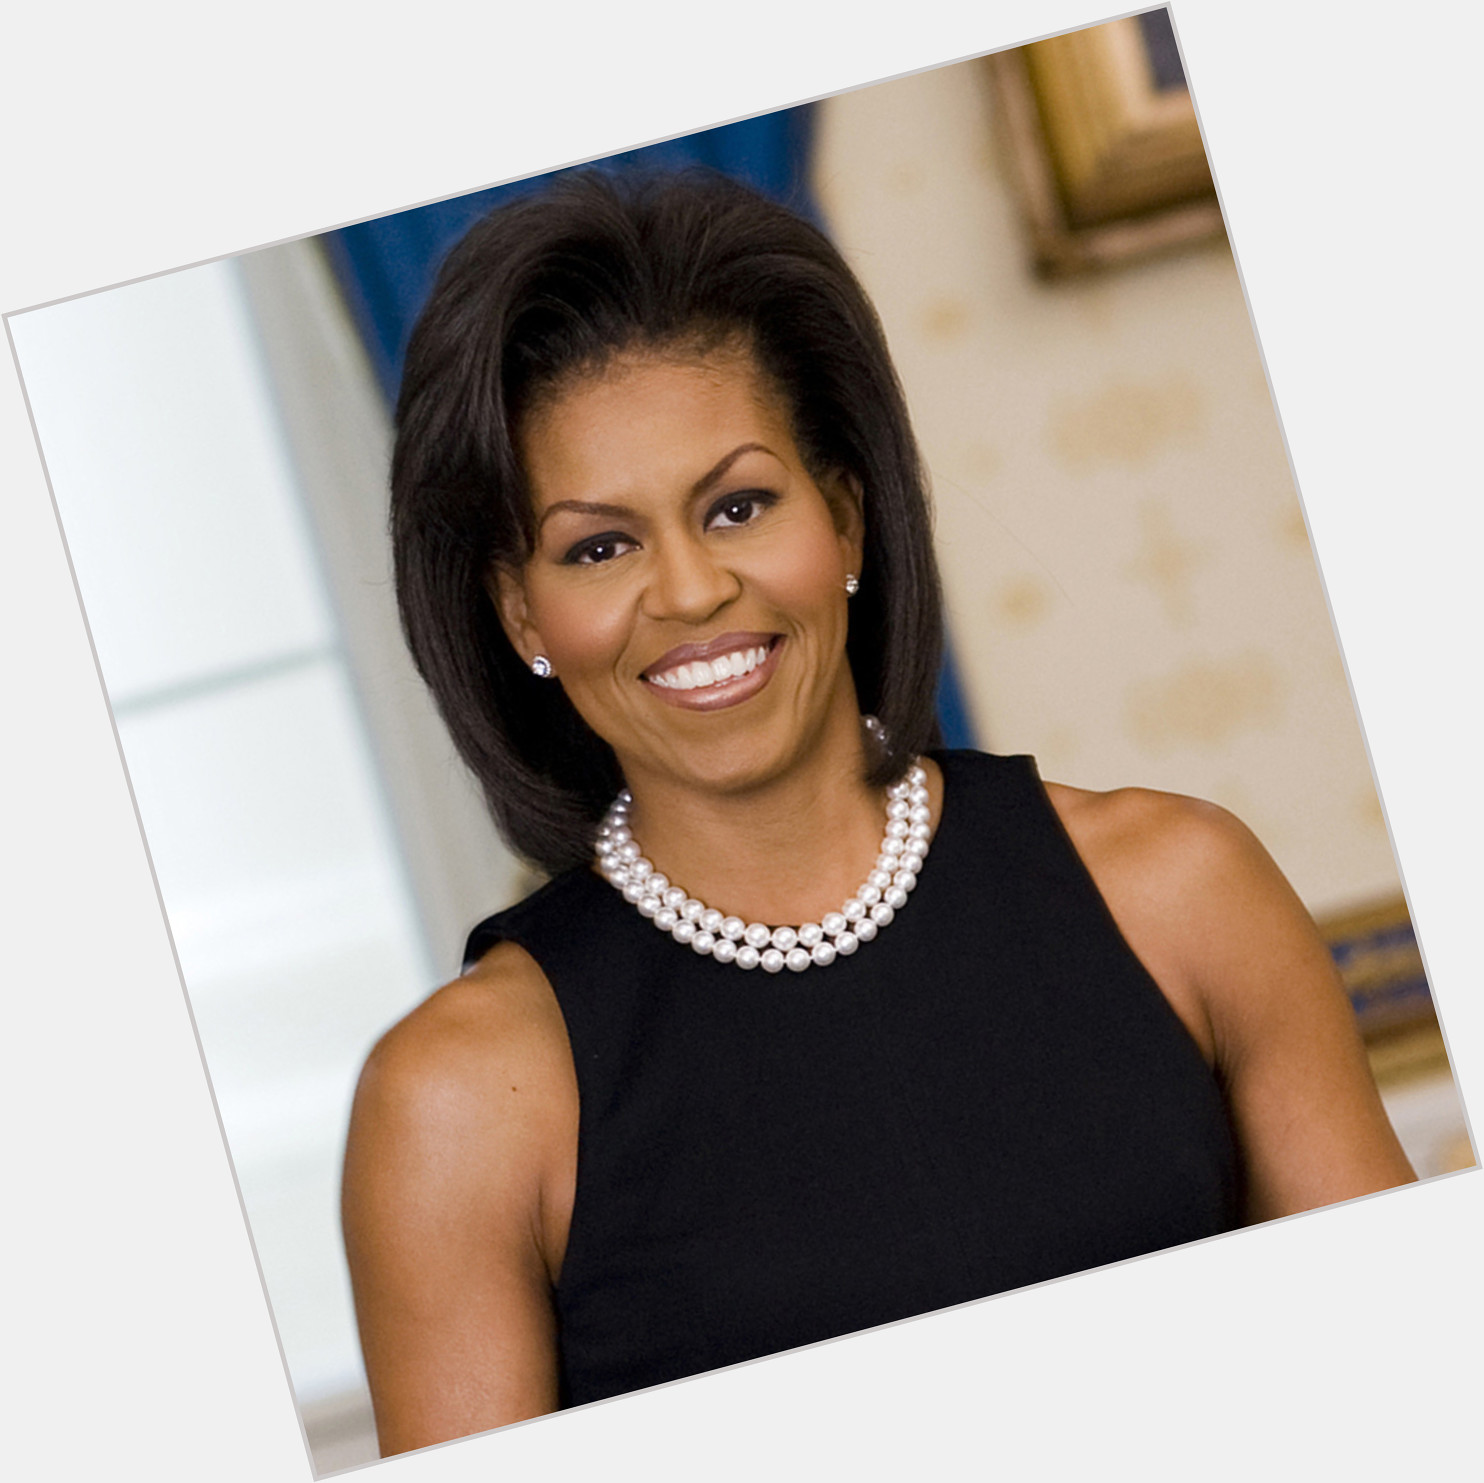 Happy birthday to:
Michelle Obama
Steve Harvey
Jake Paul
Hanayo Koizumi 